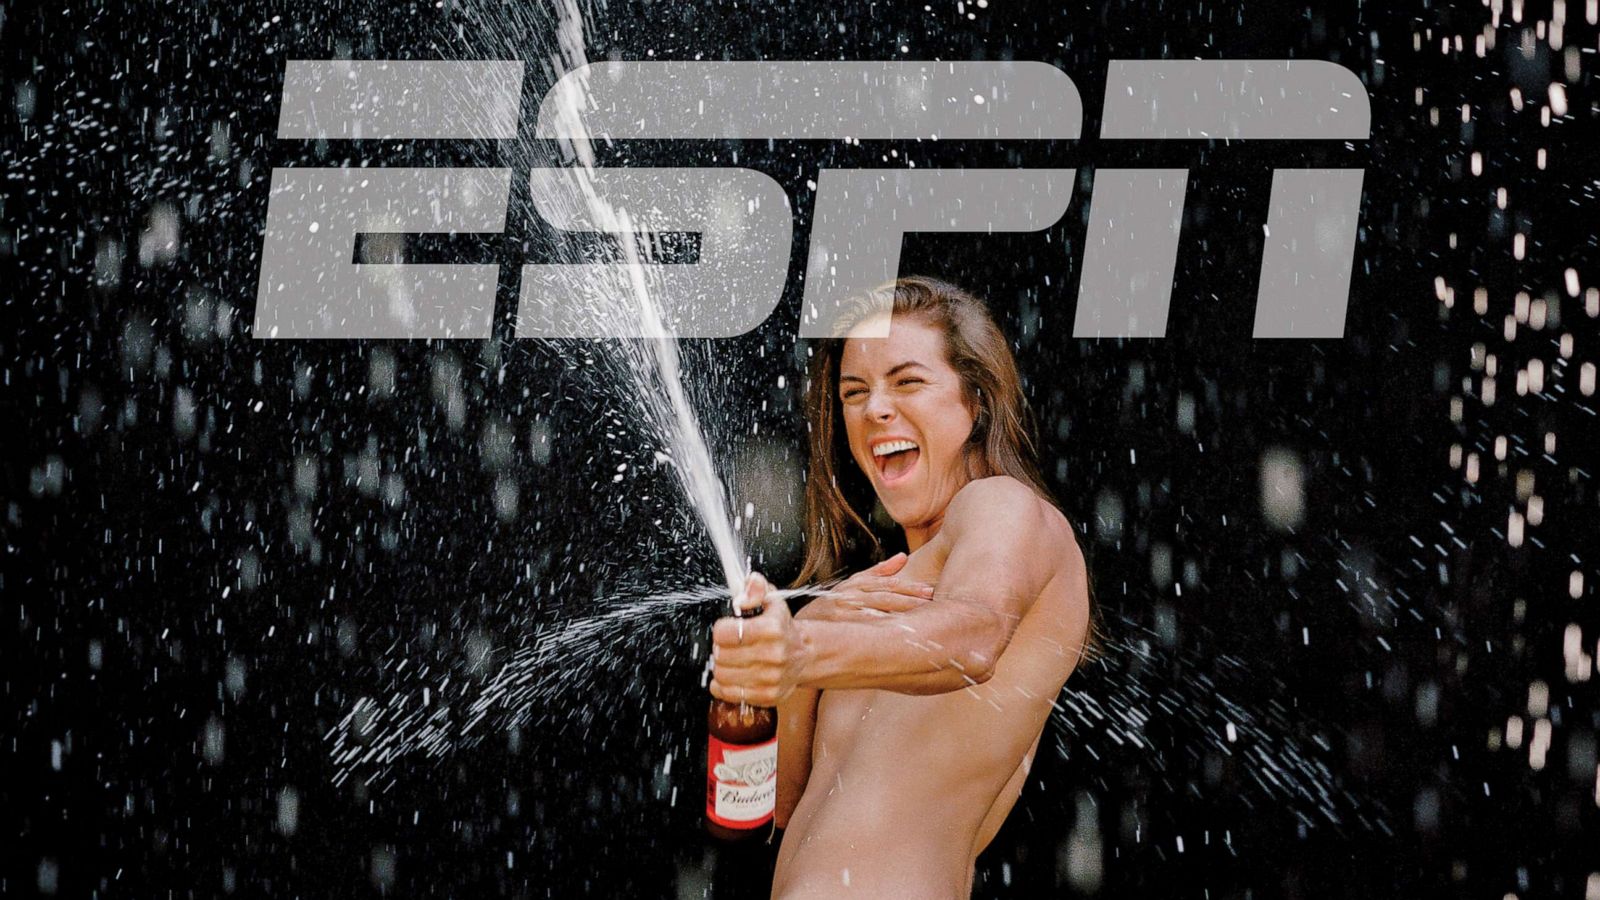 1st look at ESPN's 2019 Body Issue photos, including Katelyn Ohashi, K...